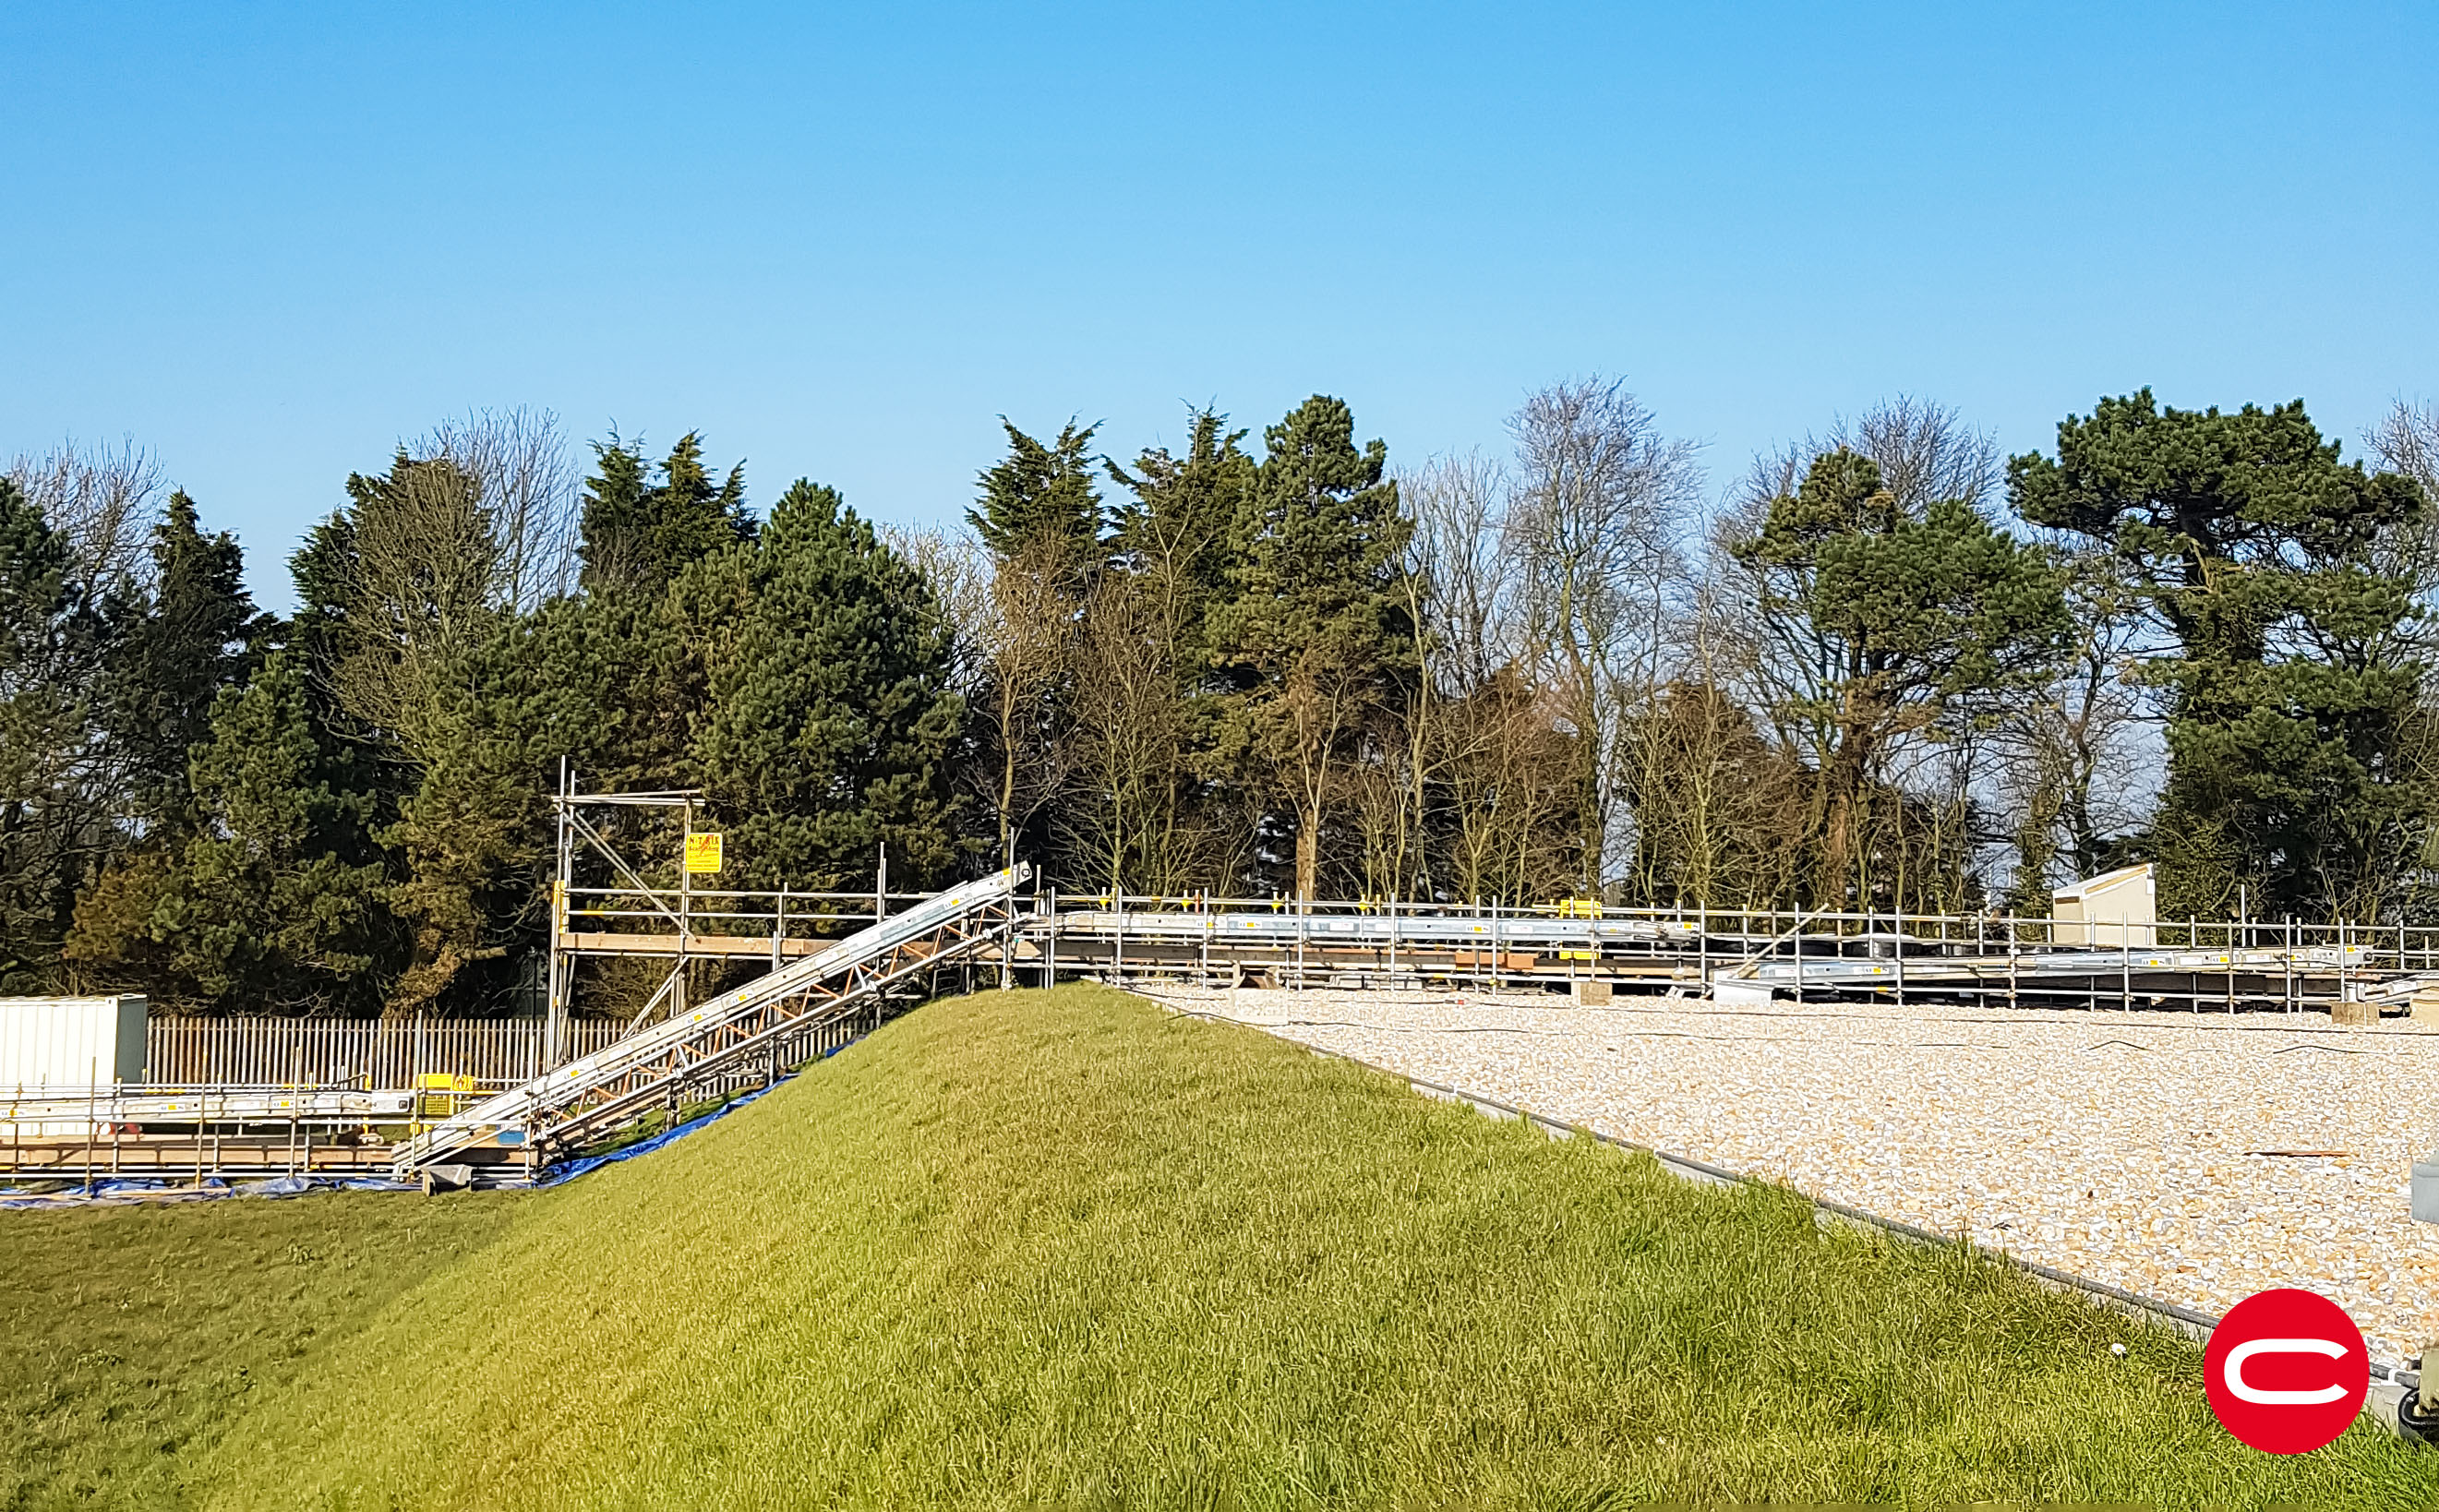 Water Treatment & Reservoir Maintenance : Weight restriction for gravel movement on covered reservoir [EK 450]